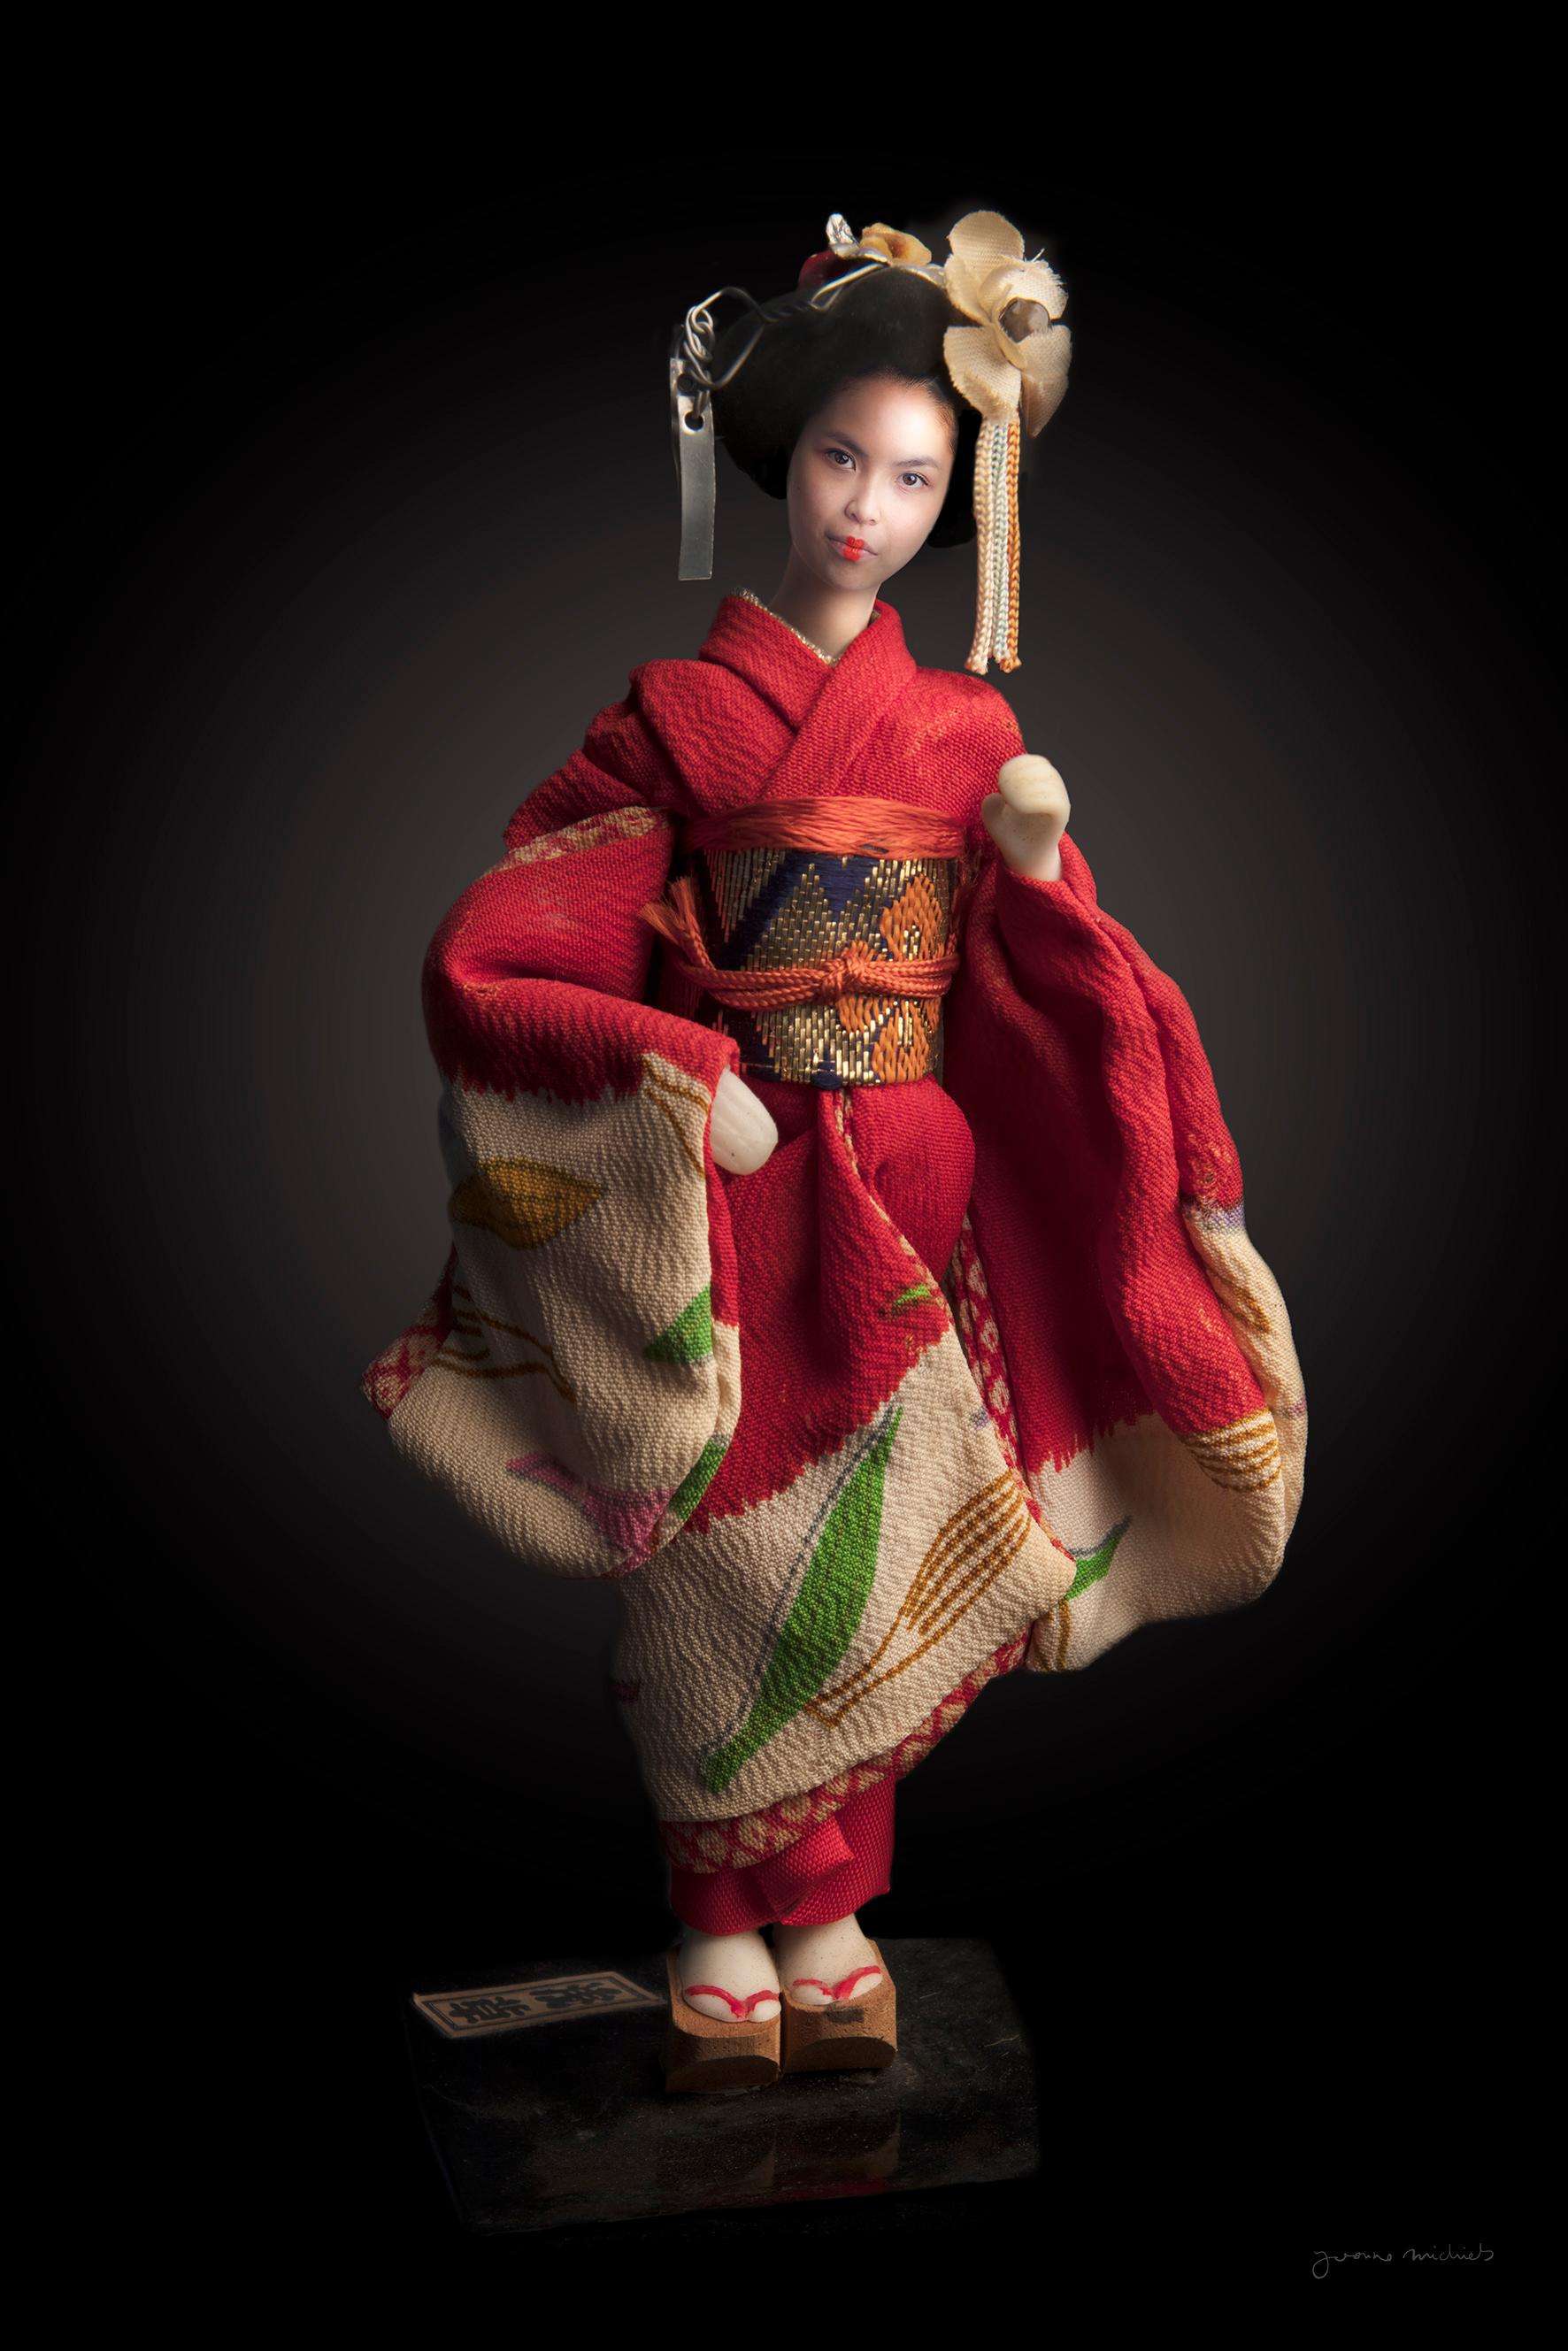 Yvonne Michiels Portrait Photograph - ''Living Doll Li-An'' Portrait of a Living Doll in Japanese Costume